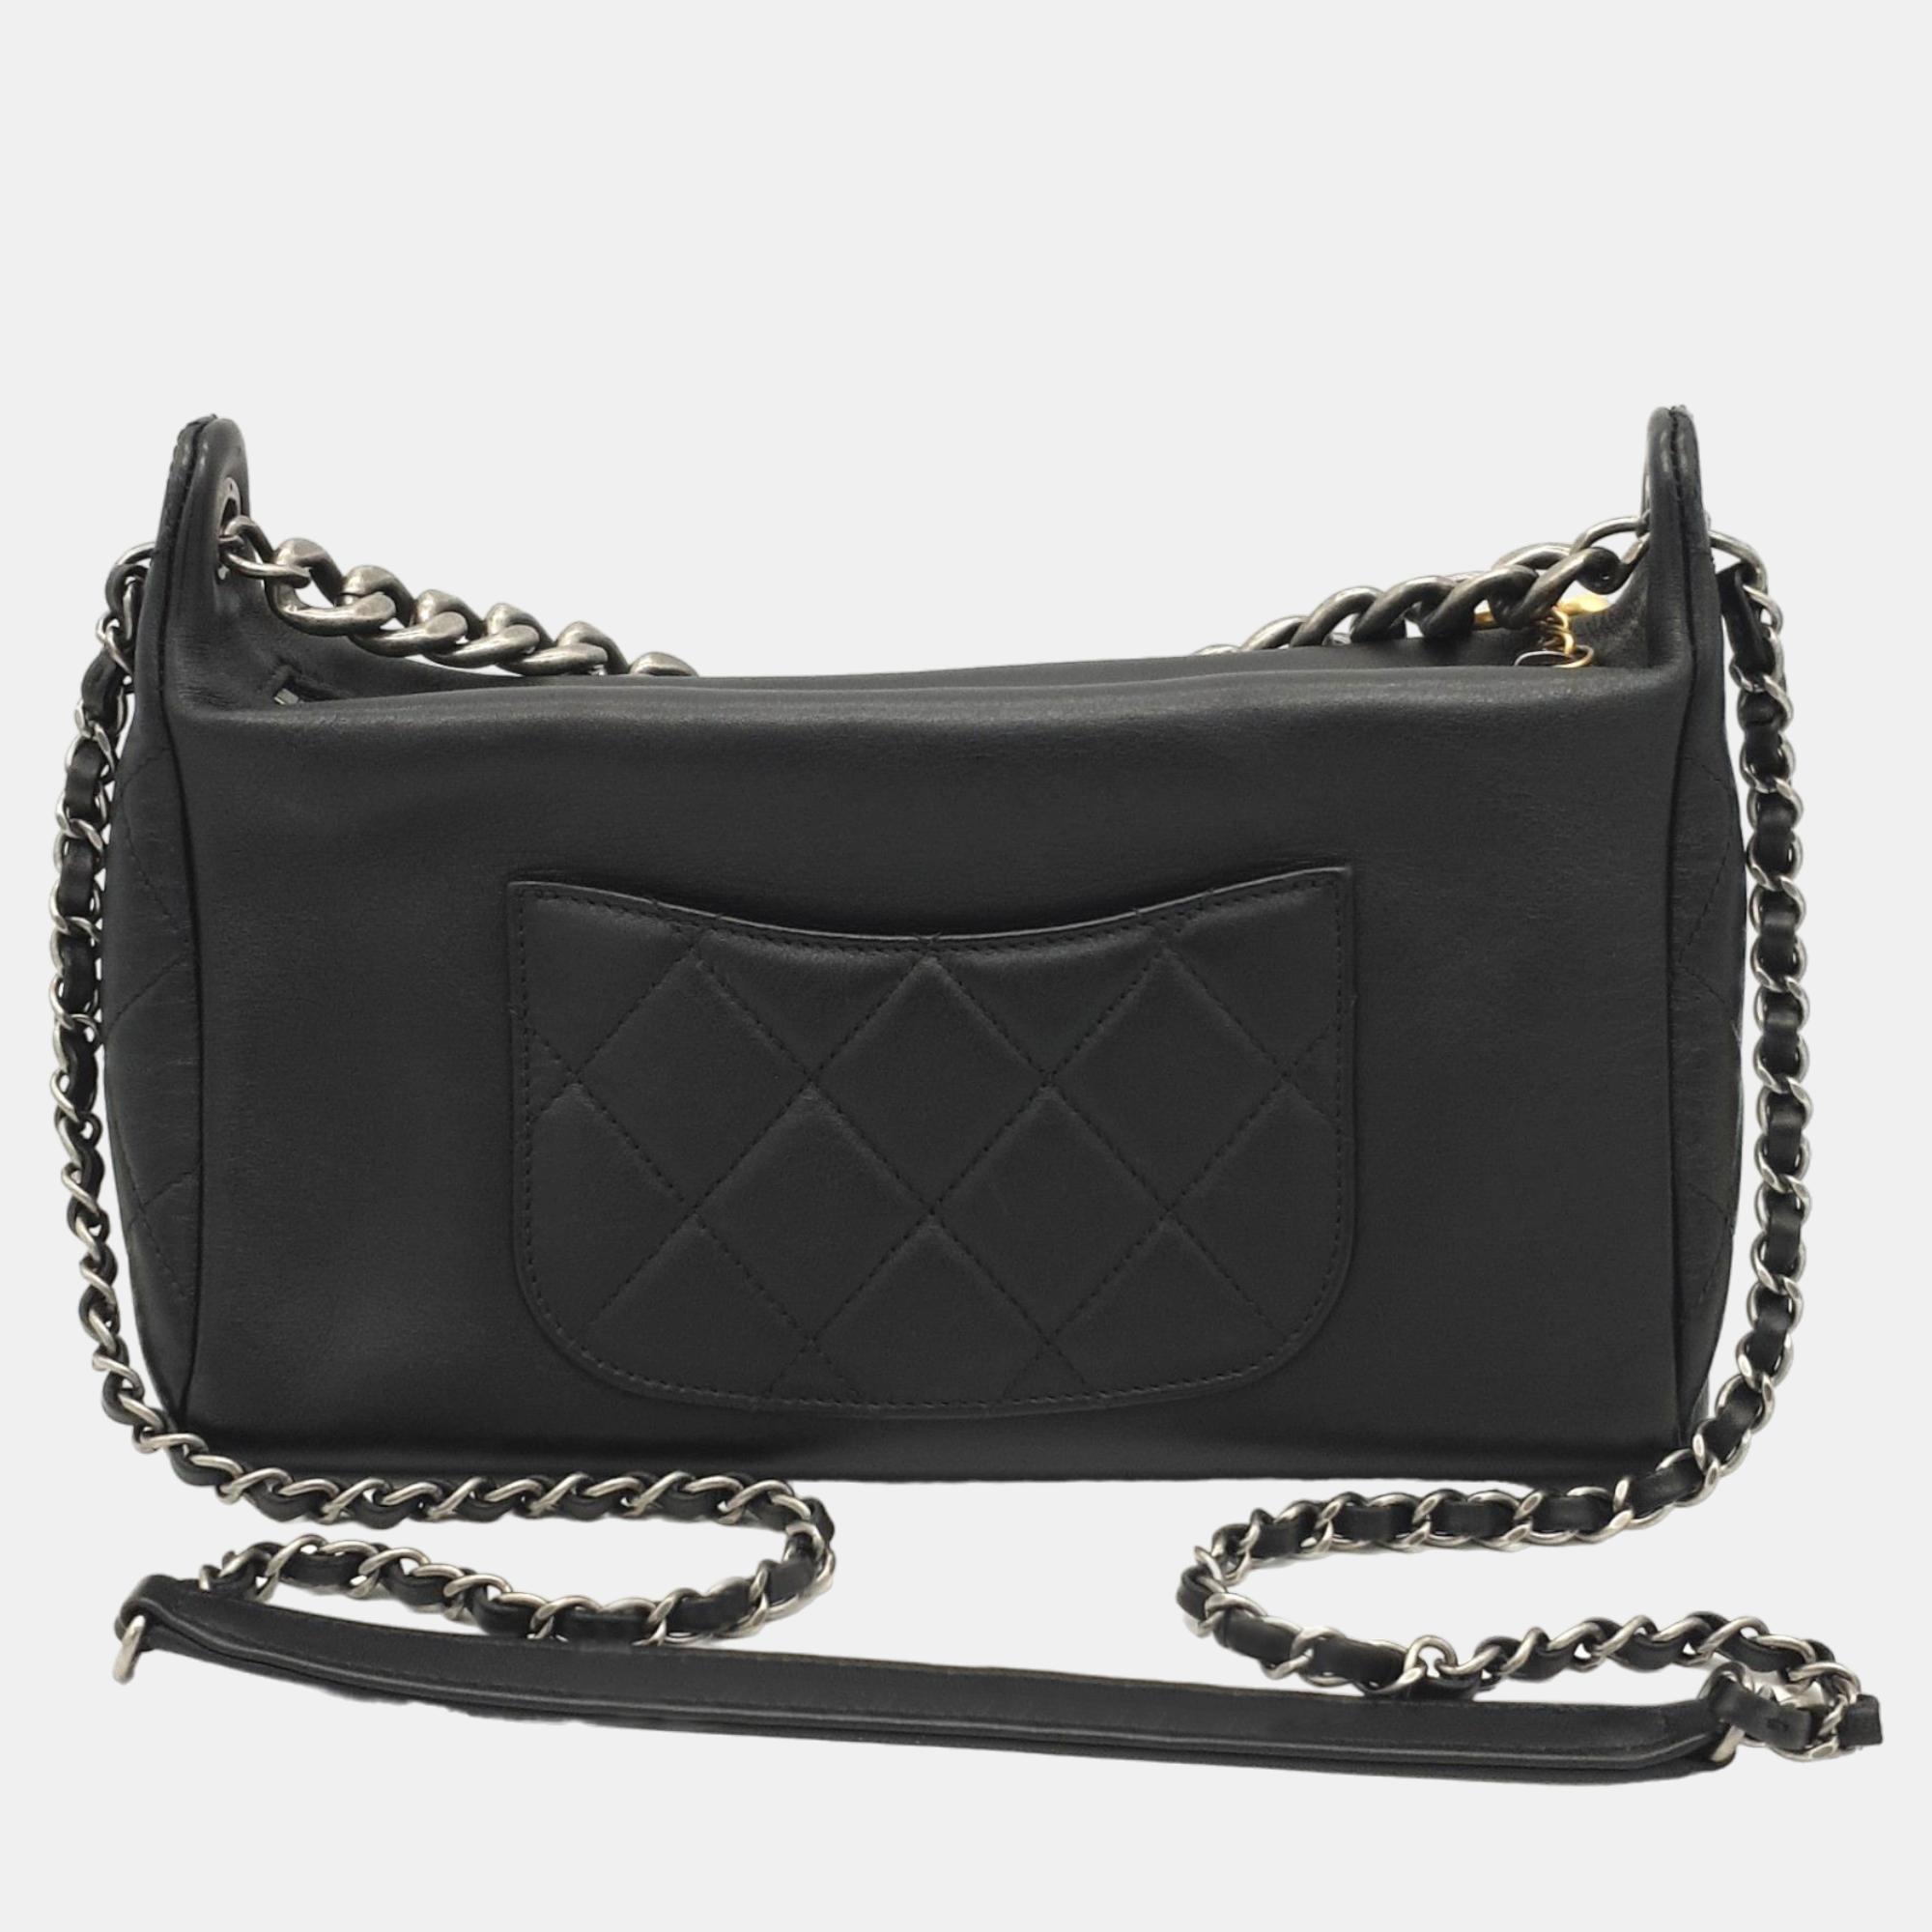 Chanel Black Leather Written In Chain Hobo Shoulder Bag